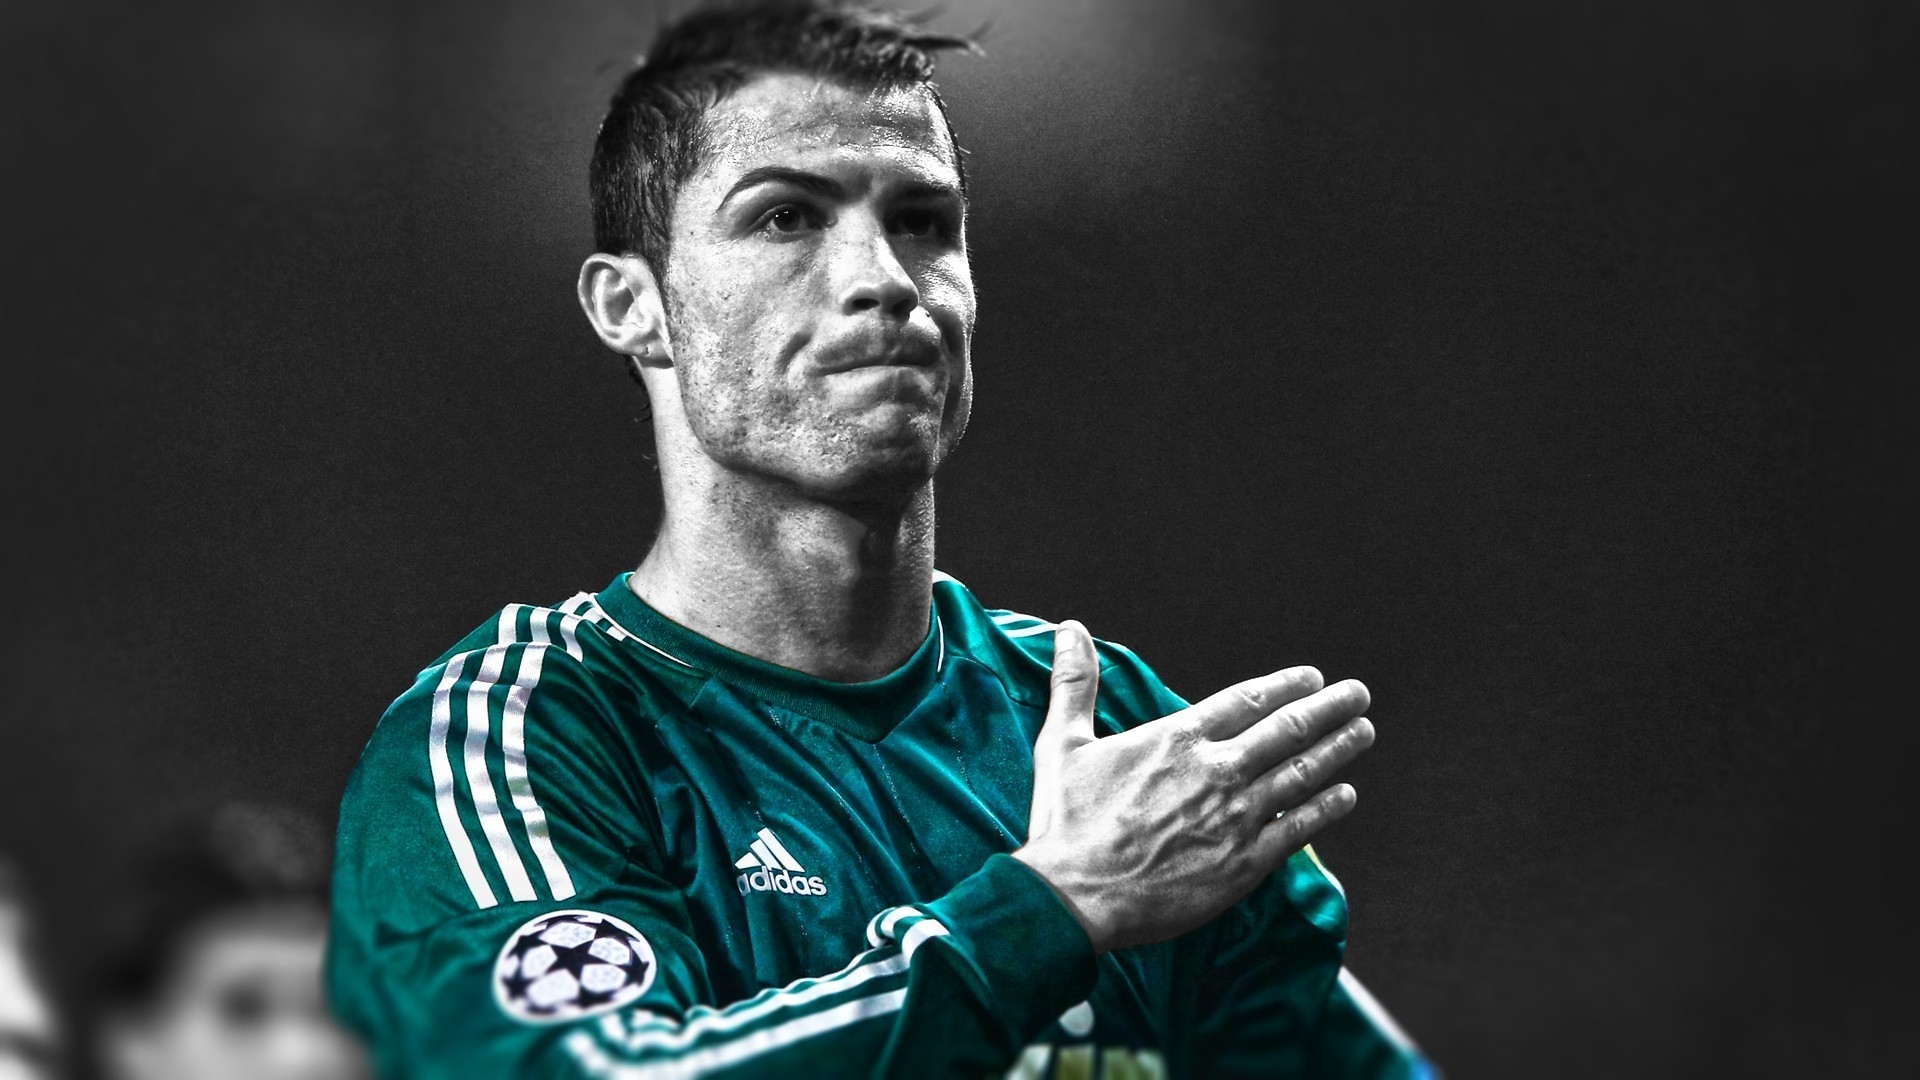 Cristiano Ronaldo Monochrome for 1920 x 1080 HDTV 1080p resolution